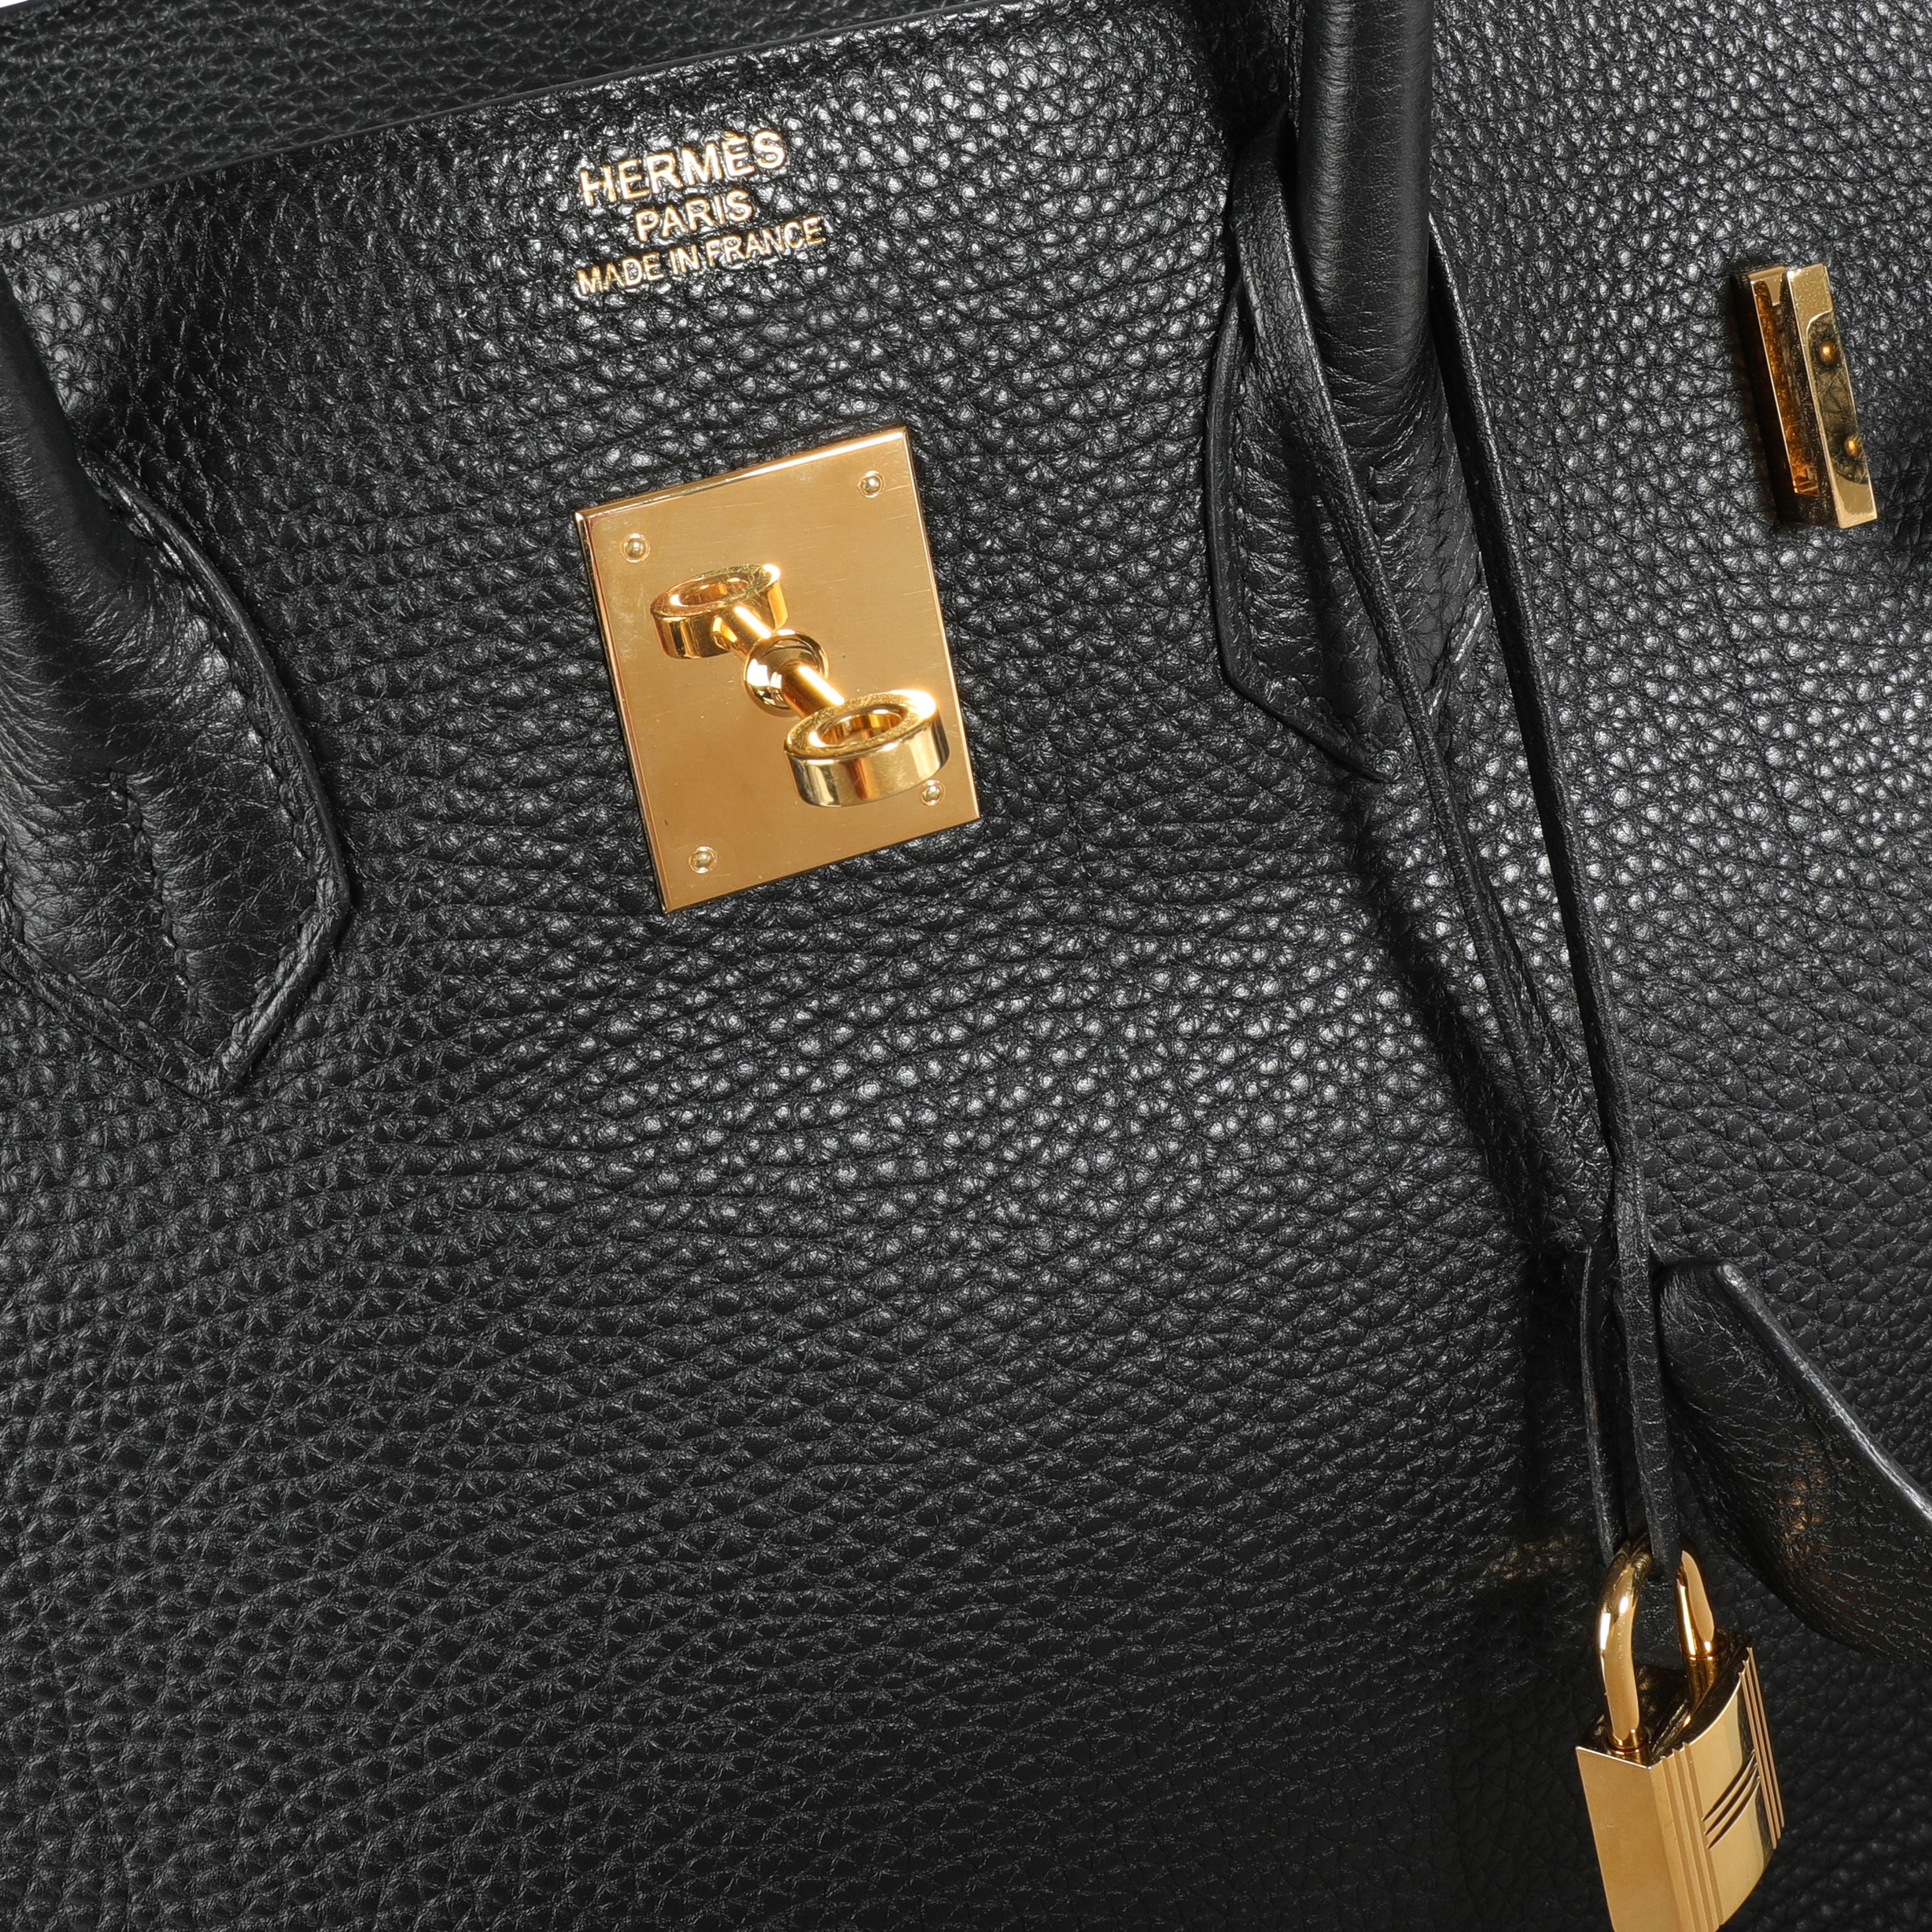 Hermès Black Togo Birkin 35 GHW
SKU: 111542

Handbag Condition: Very Good
Condition Comments: Very Good Condition. Faint scuffing to leather. Scratching to hardware.
Brand: Hermès
Model: Birkin
Origin Country: France
Handbag Silhouette: Top